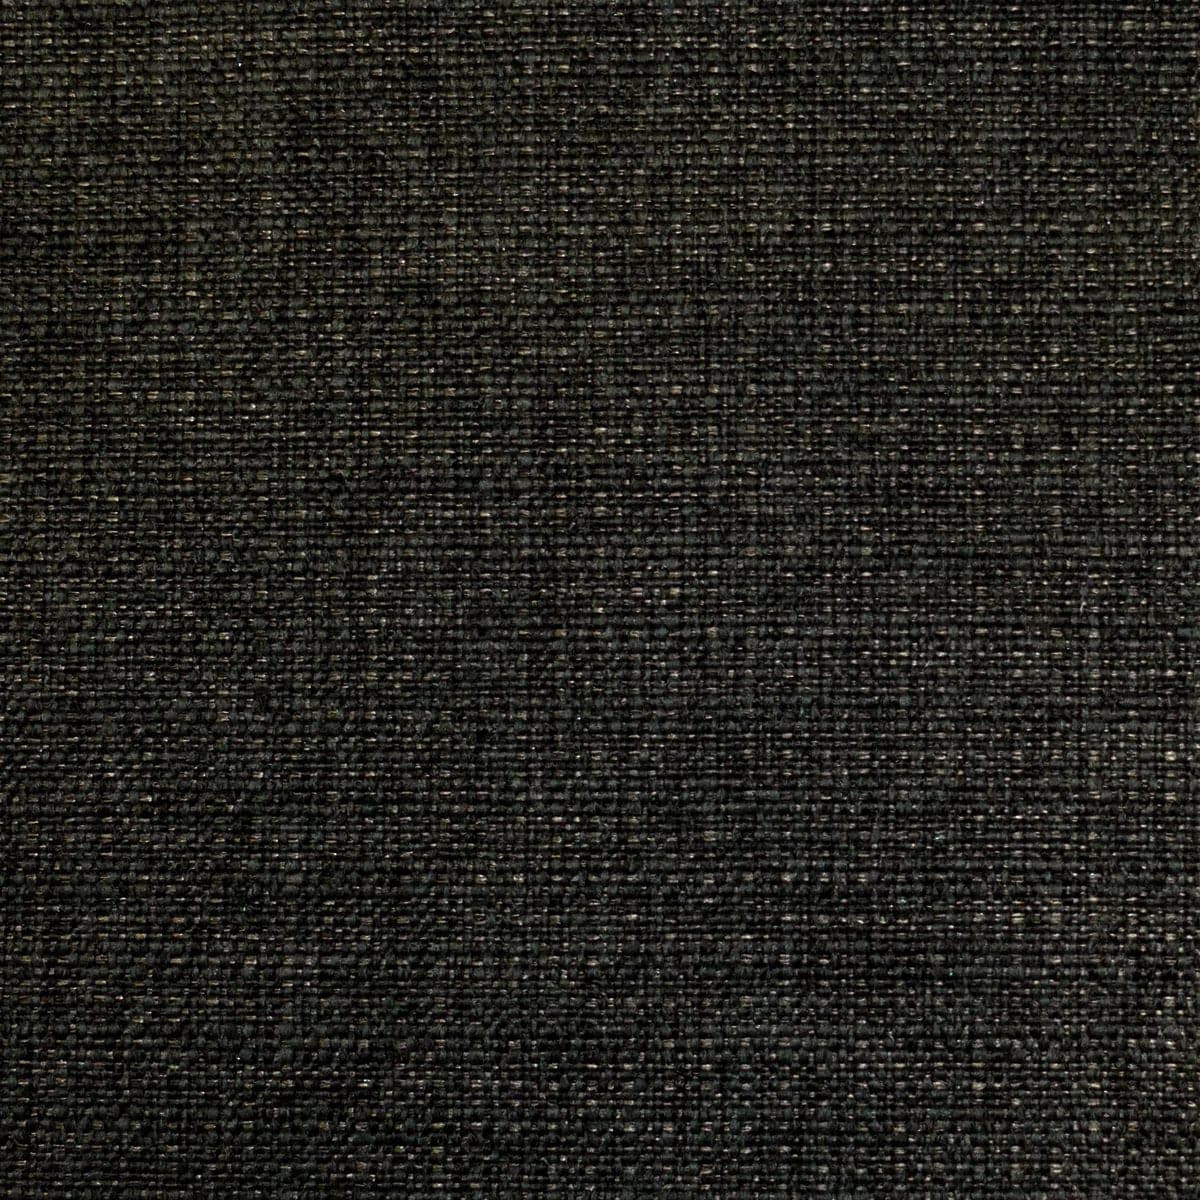 Brisbane Charcoal Black Fabric Swatches | Barnett Home Decor | Black